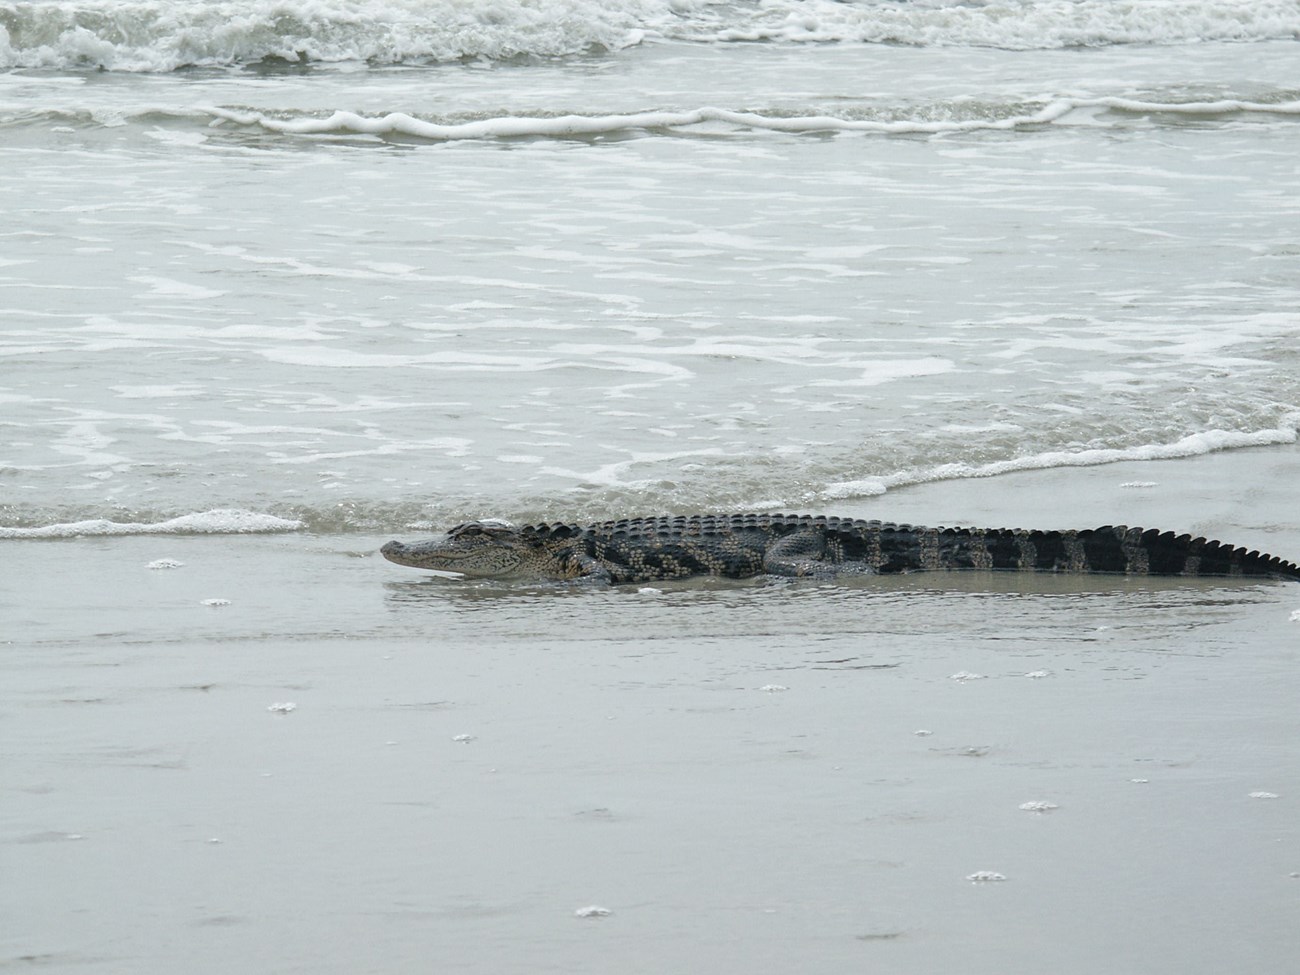 Photo of alligator on beach near Atlantic Ocean's edge